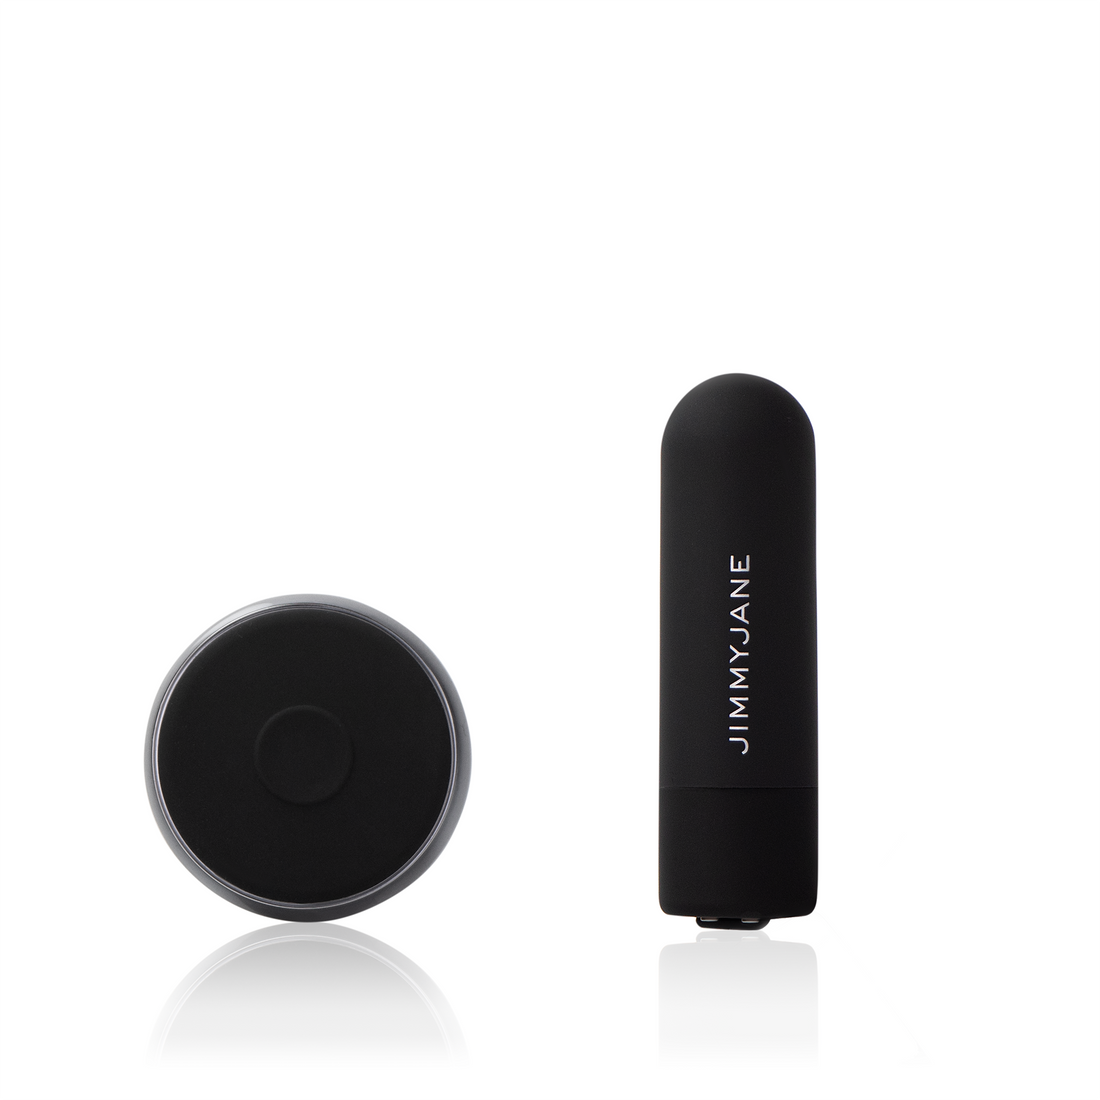 Starla + Tyro™ Remote control for the Weareble Vibrator black by JimmyJane #small/medium